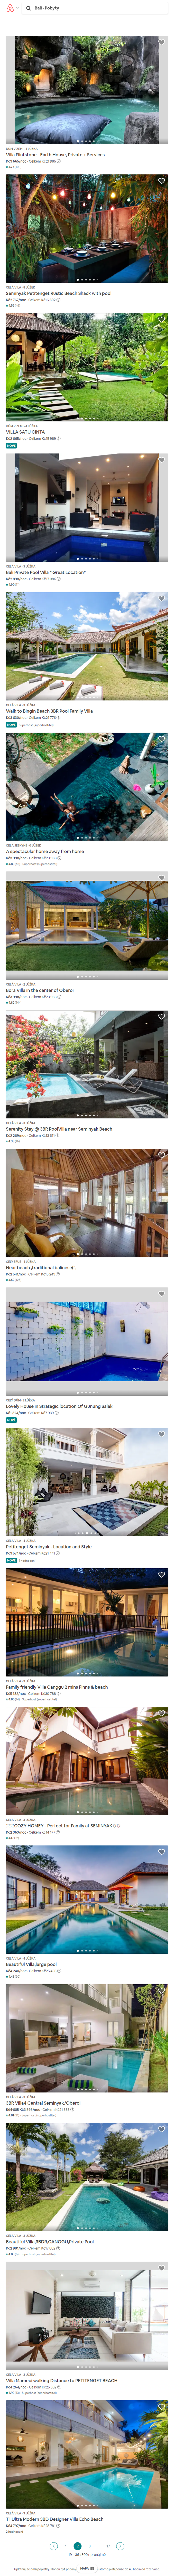 screencapture-airbnb-cz-s-Bali-Indonesia-homes-2019-11-22-22_54_49